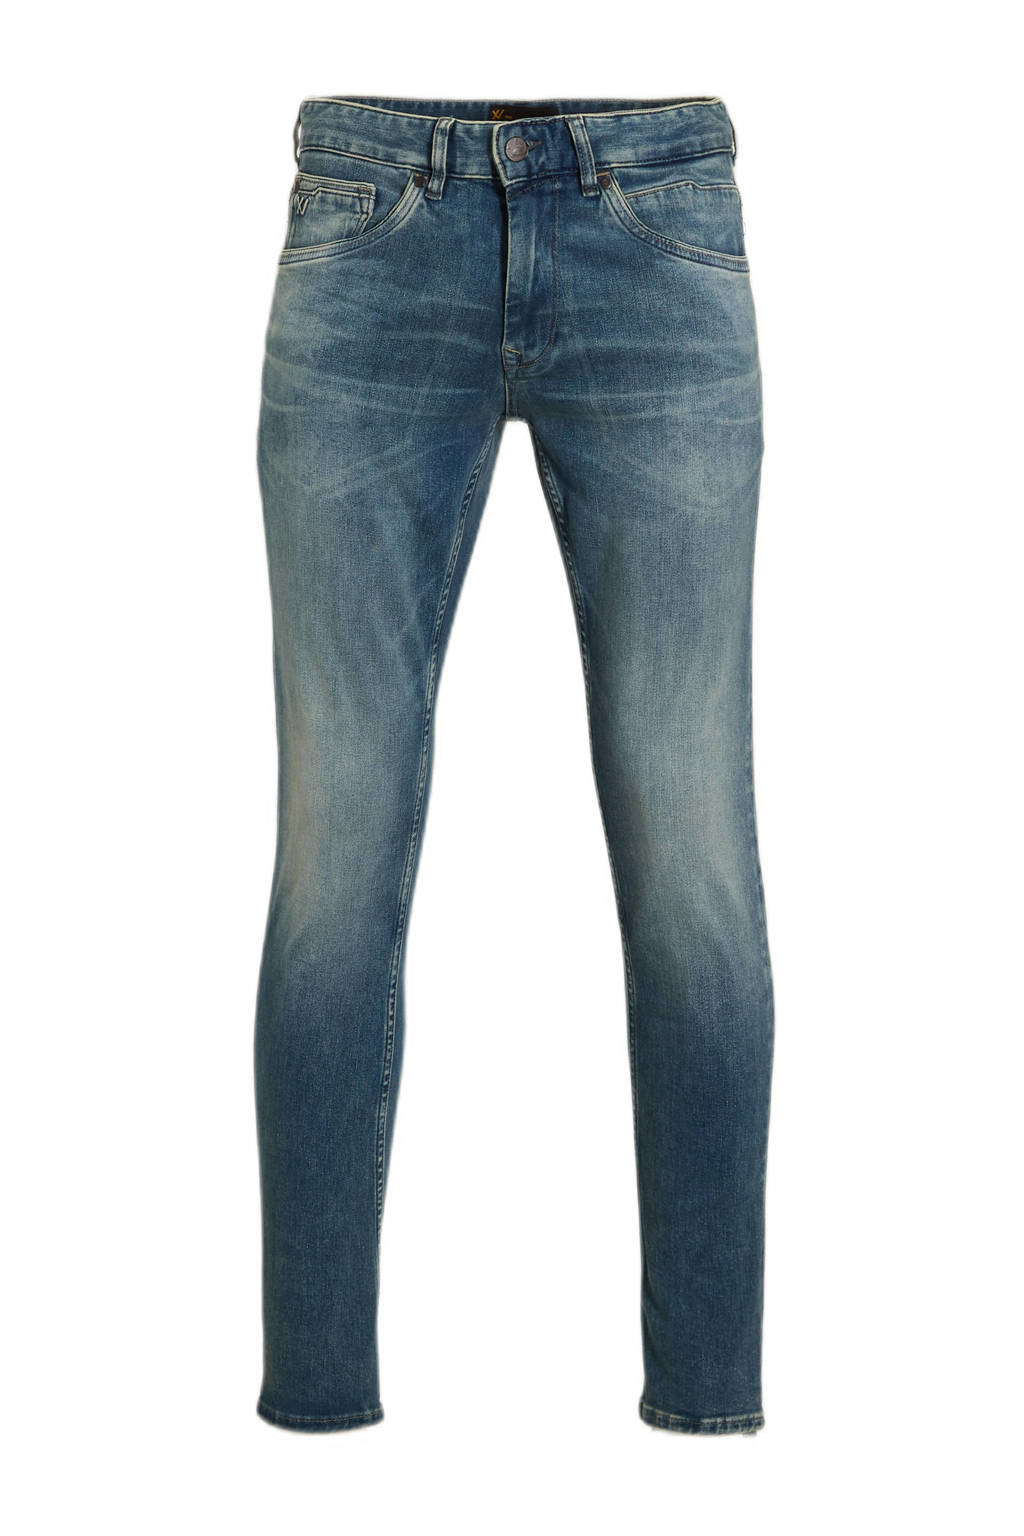 PME Legend wehkamp dirt slim fit XV wash jeans sky 